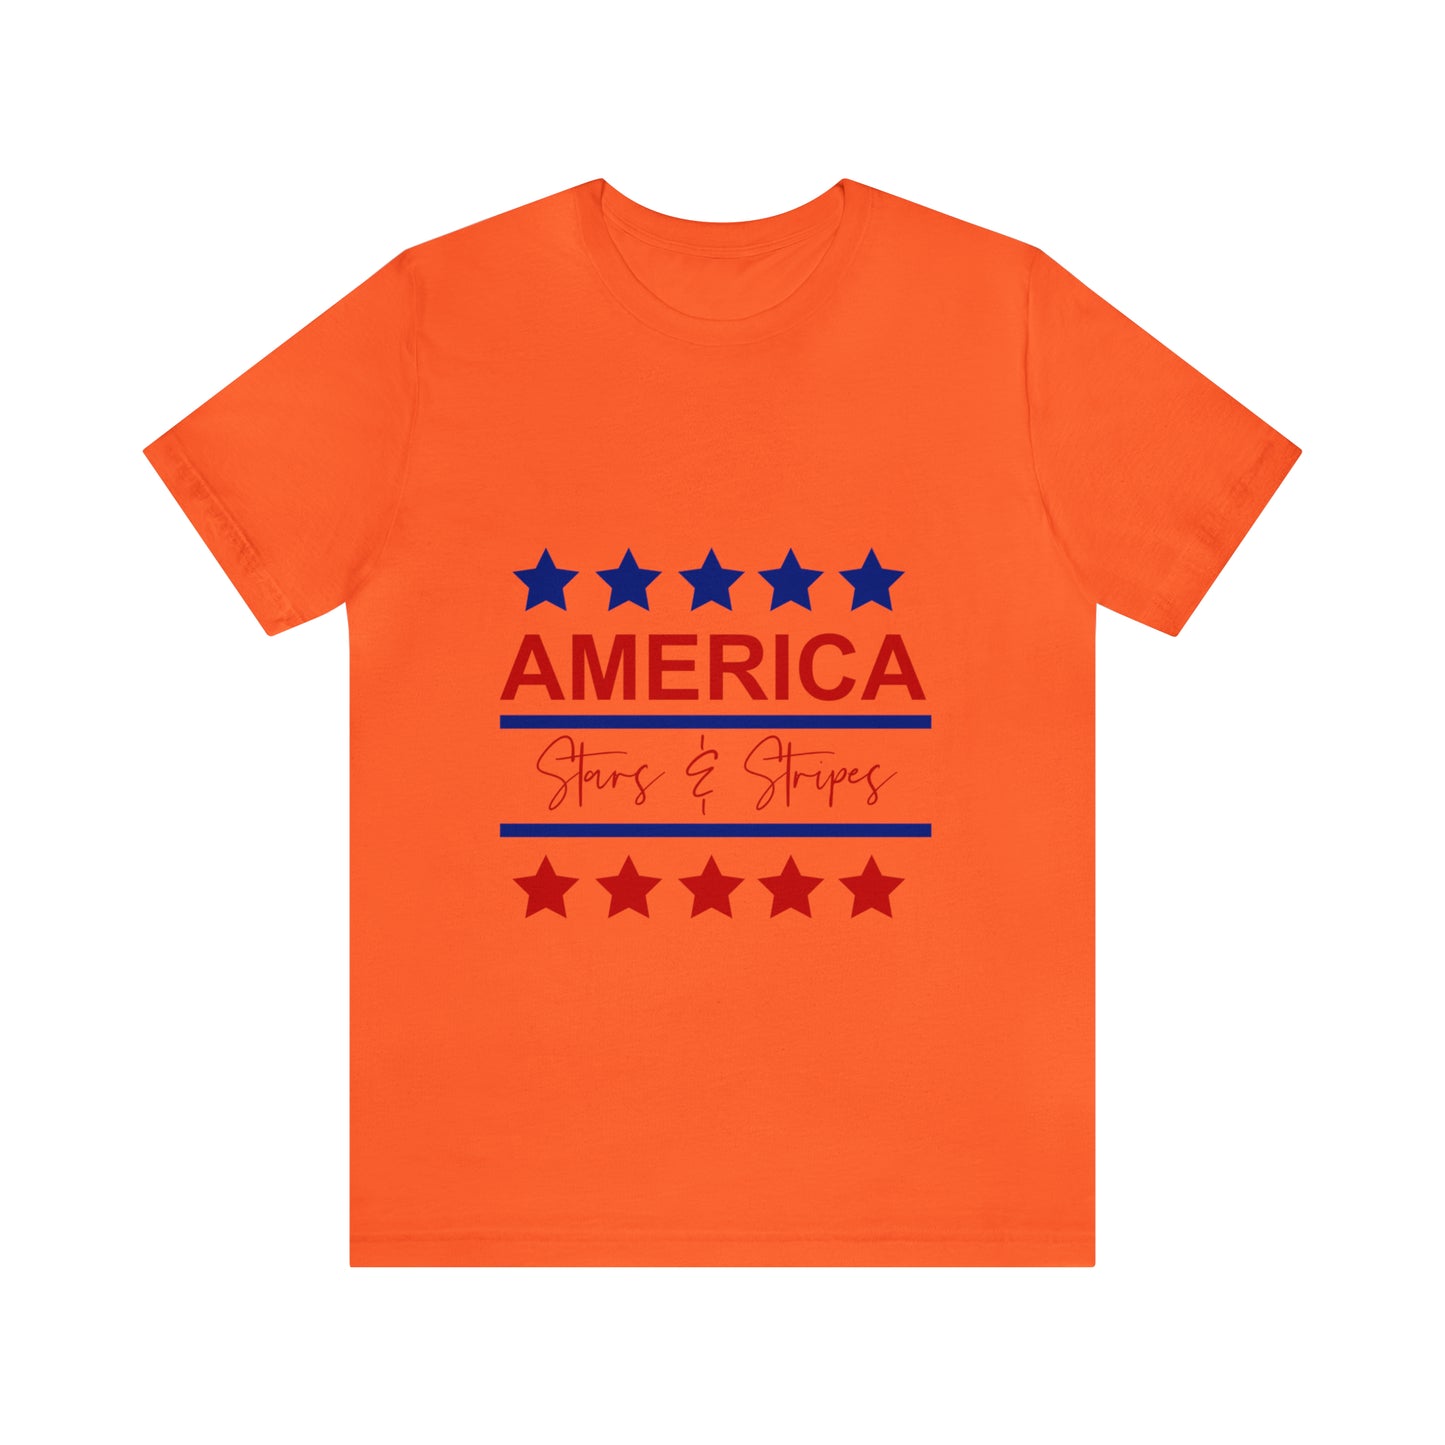 America Star & Stripes - Unisex T-Shirt